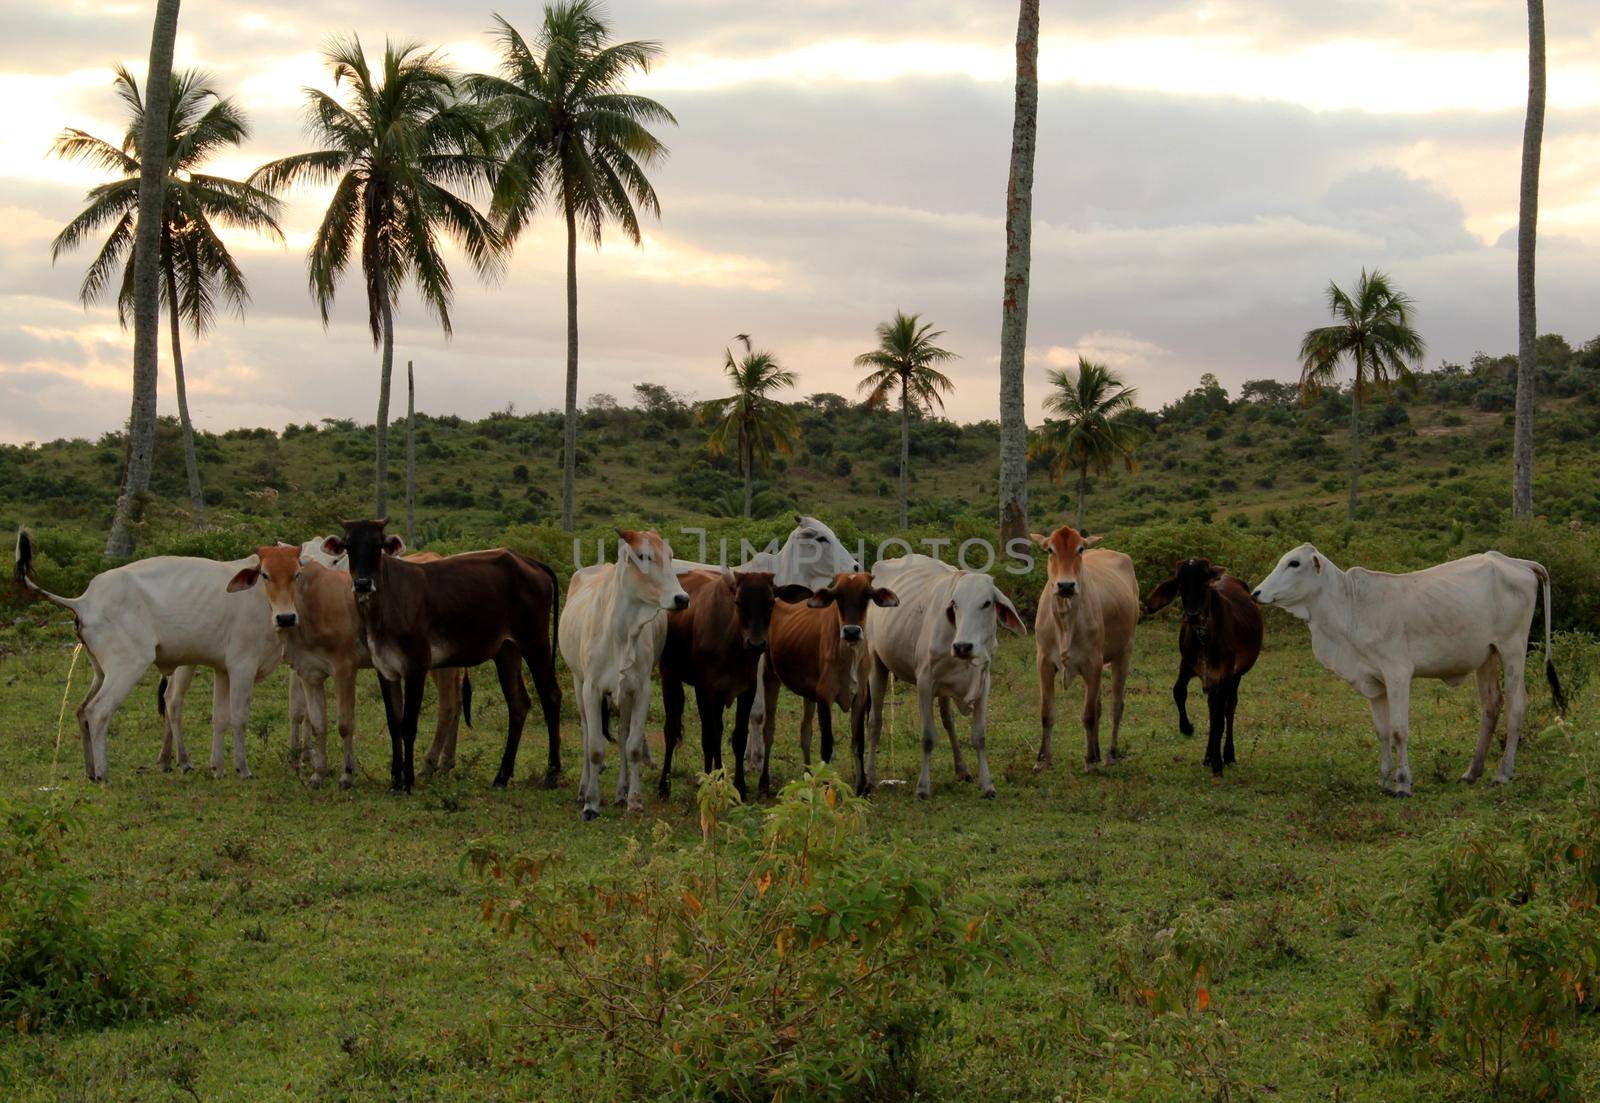 itamaraju, bahia / brazil - july 9, 2009: heifers are seen on a farm in the municipality of Itamaraju.

